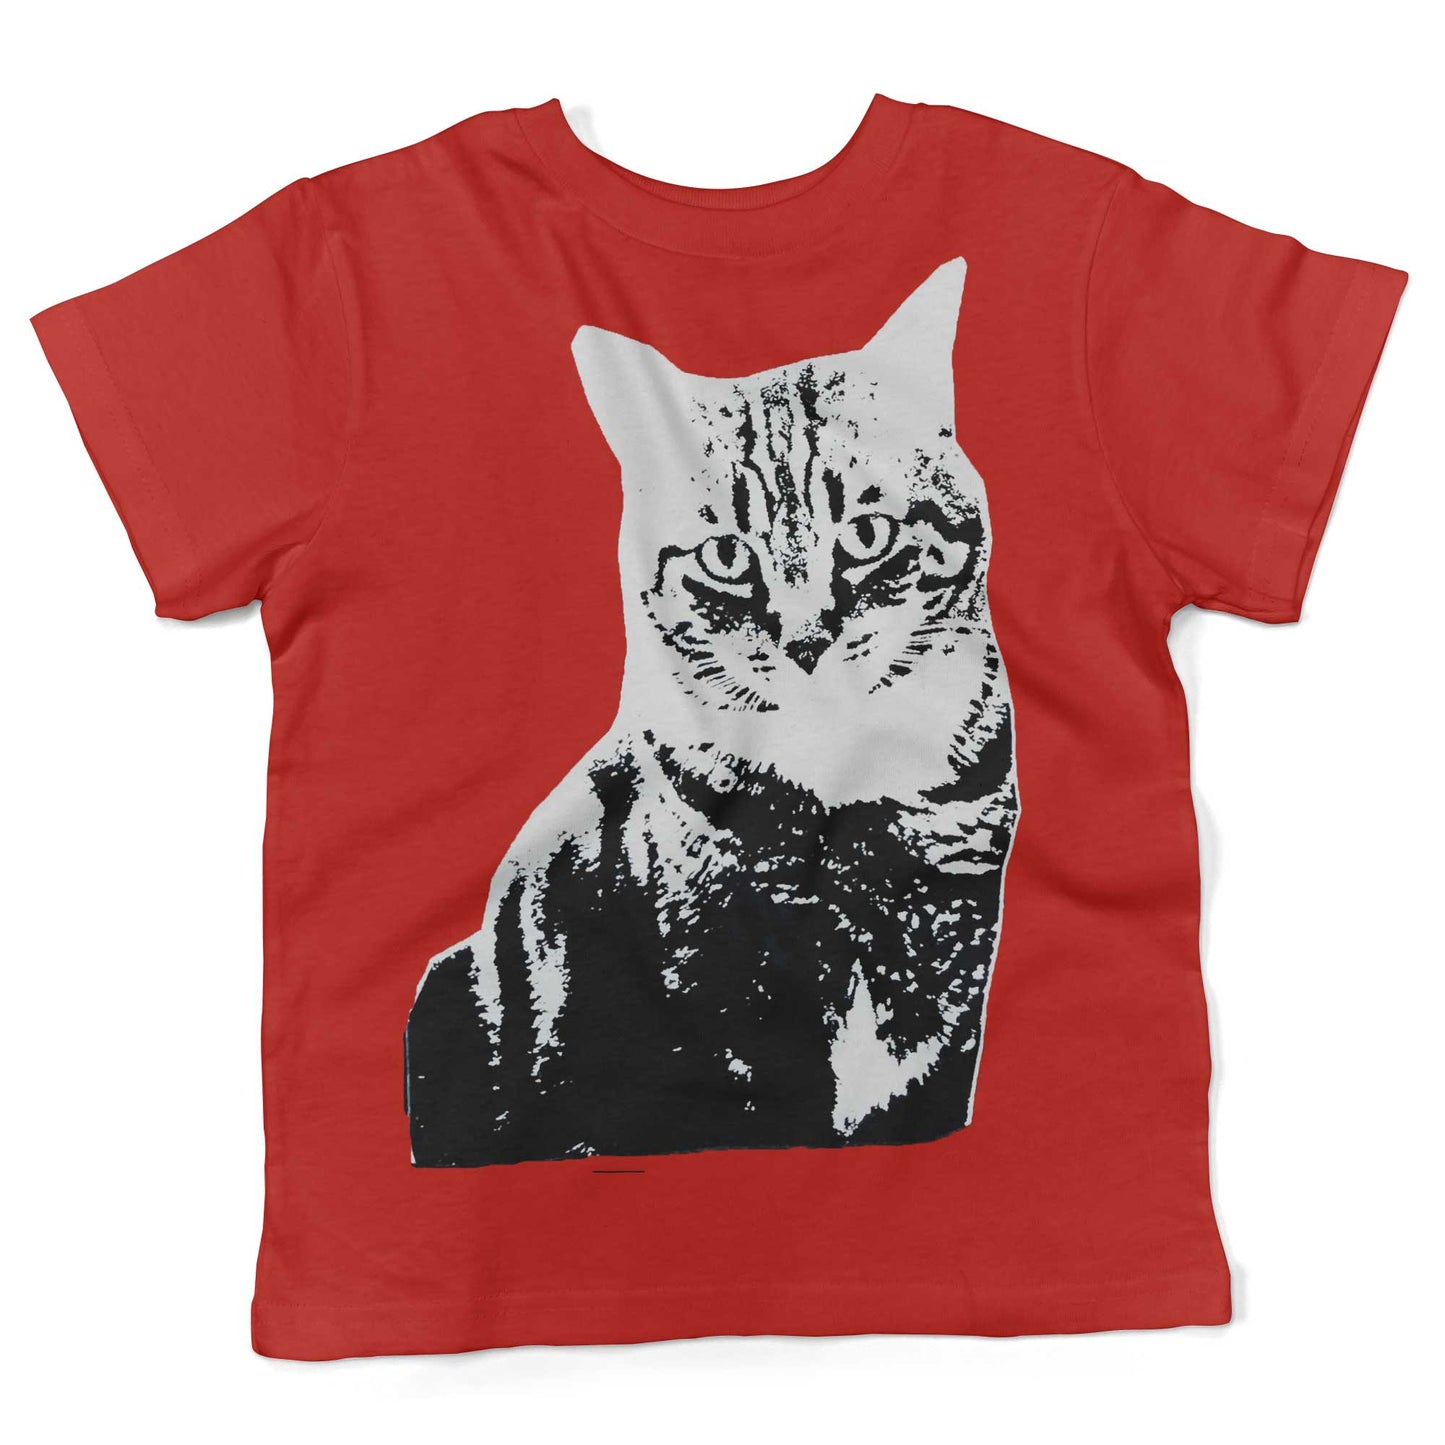 Black & White Cat Toddler Shirt-Red-2T